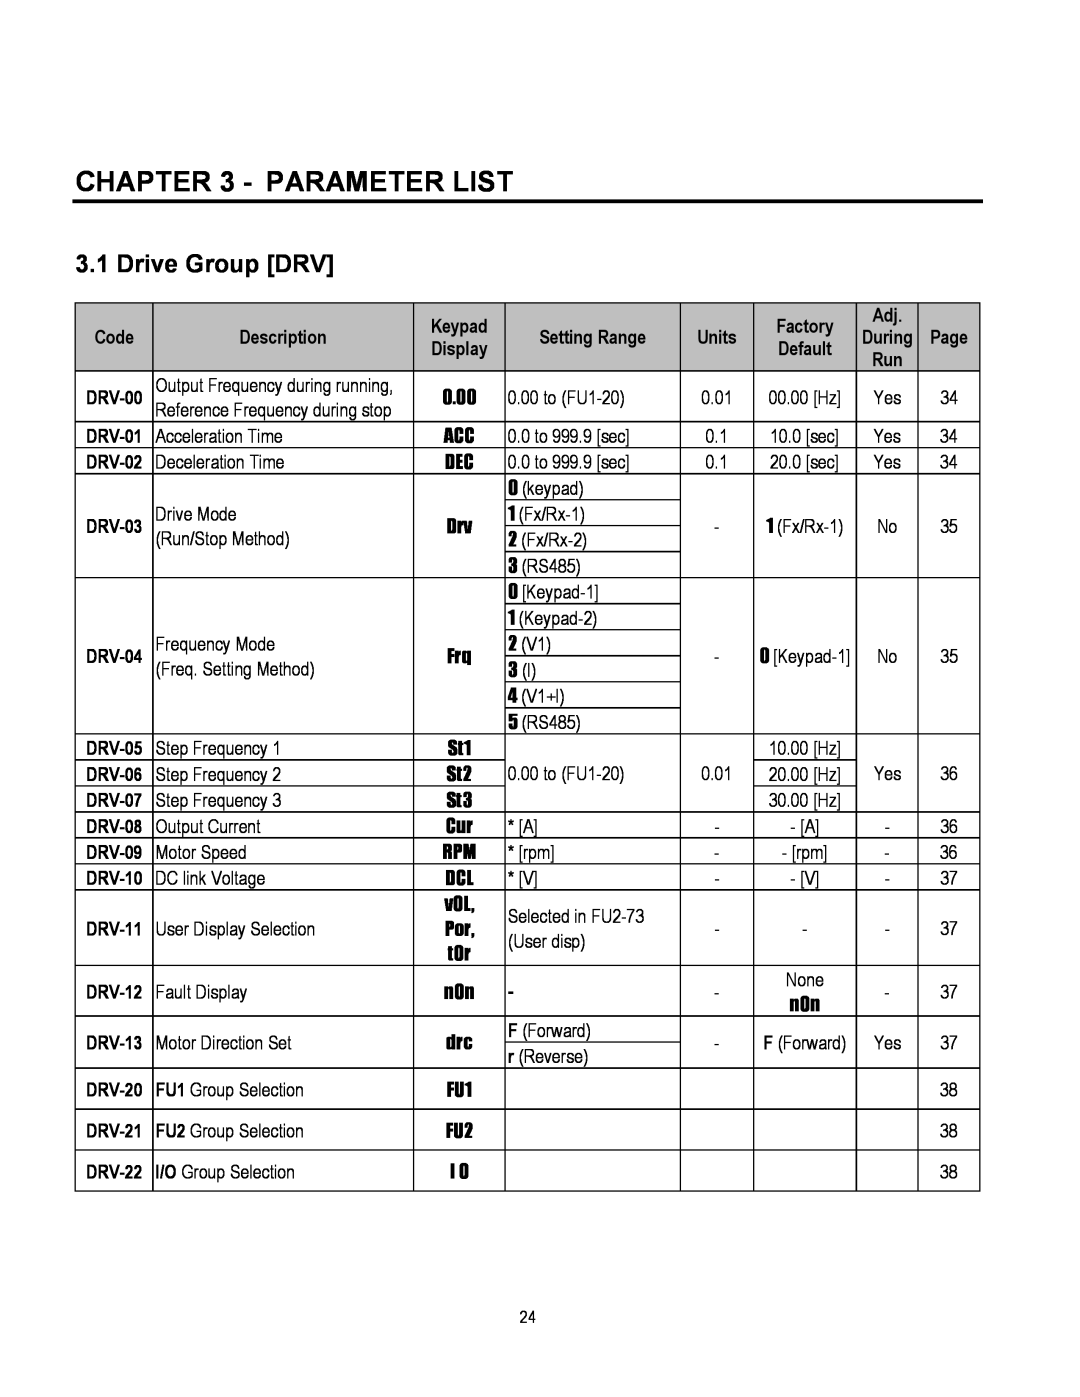 Cleveland Range inverter manual Parameter List, Drive Group DRV 